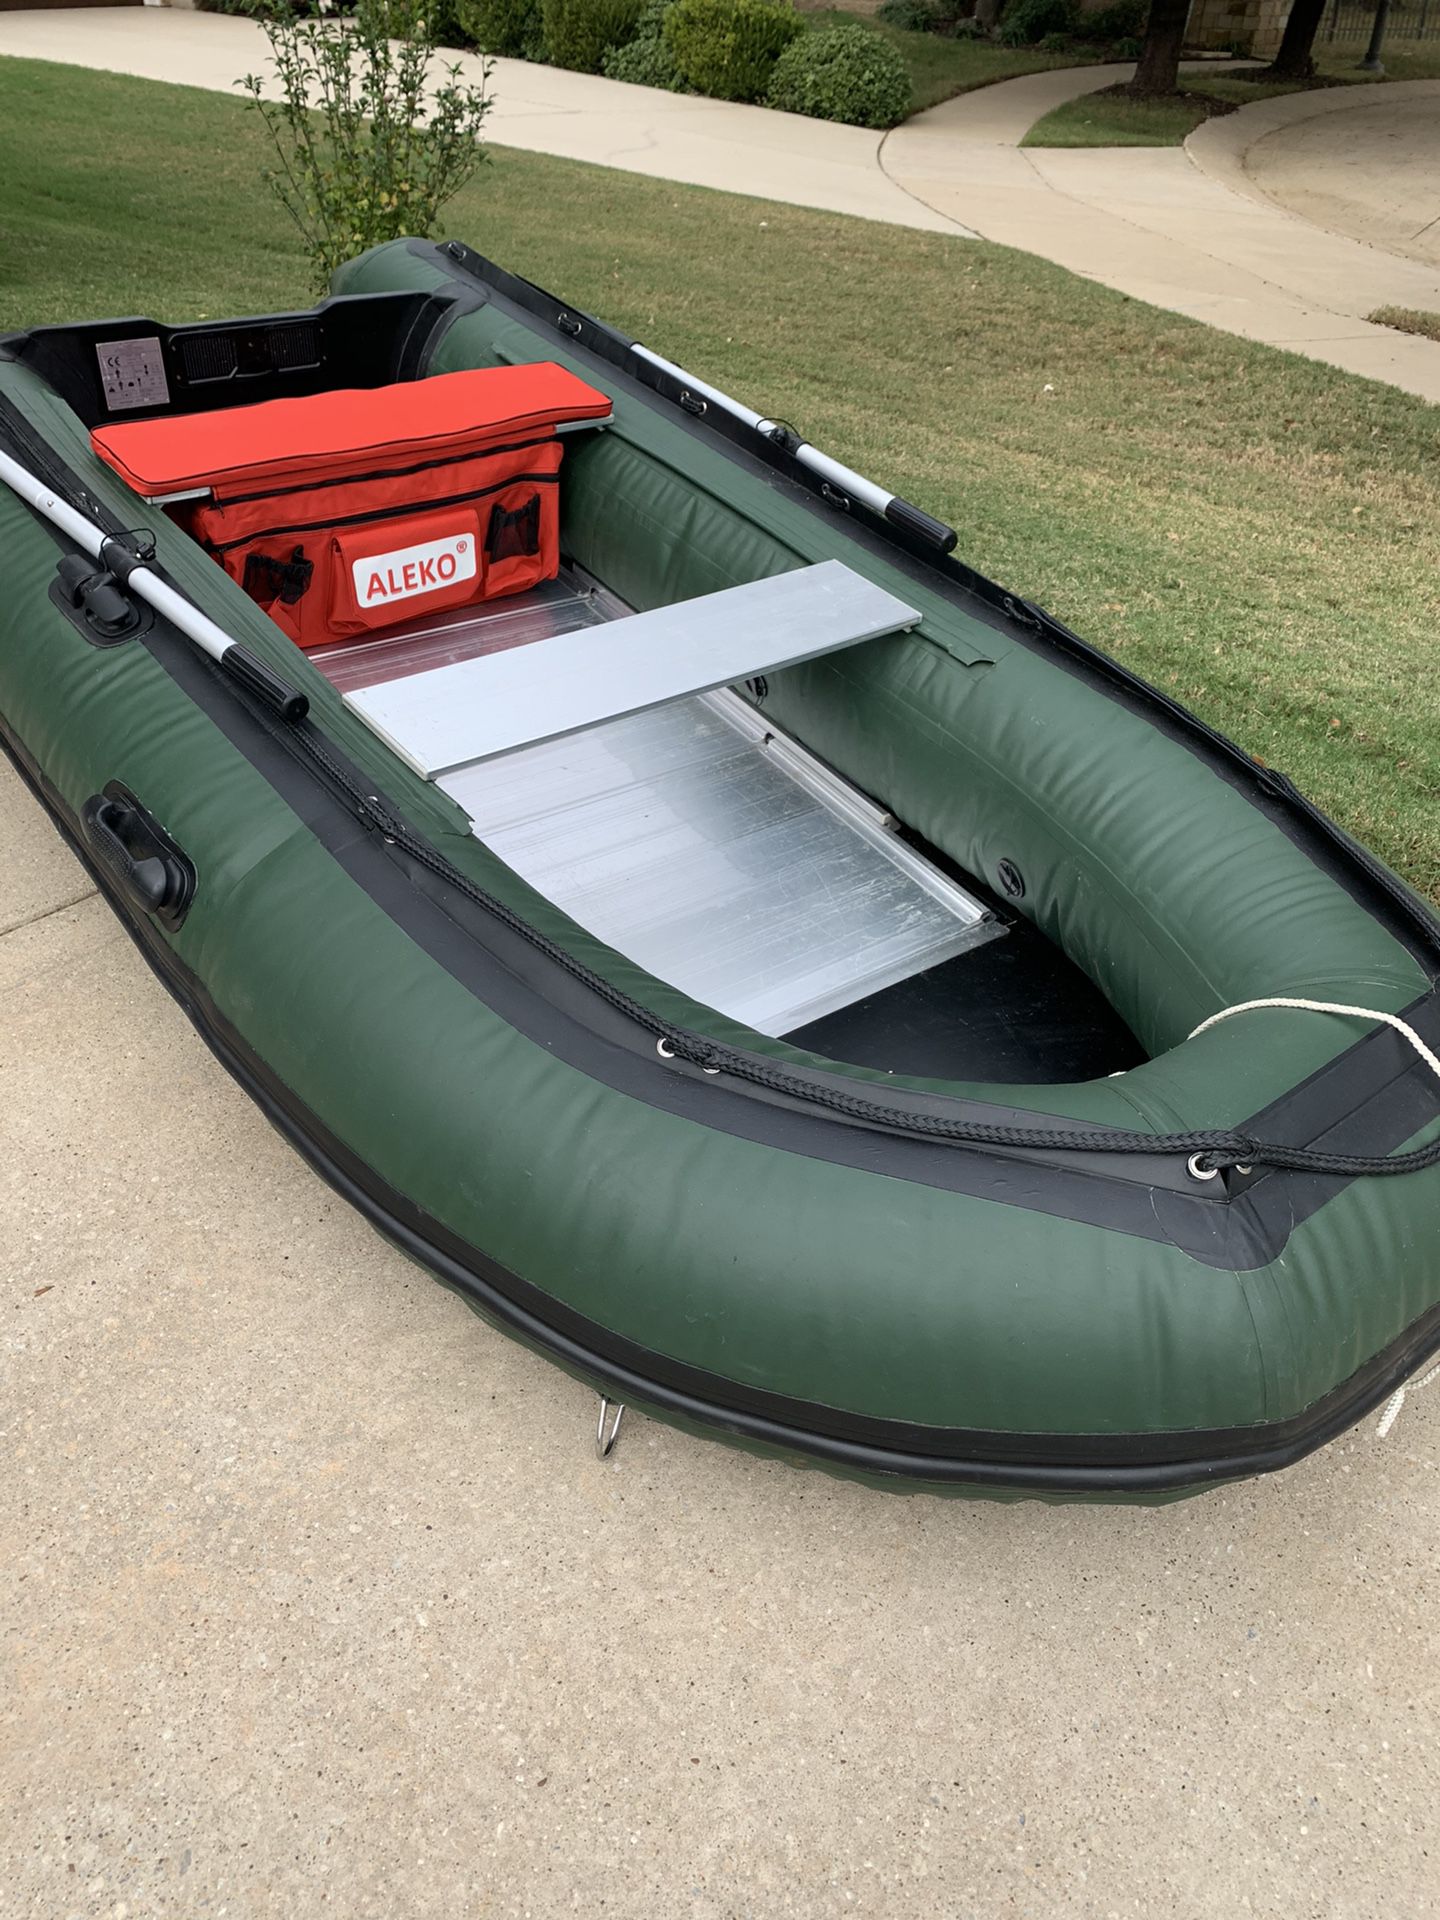 Aleko 10.5’ Inflatable Boat